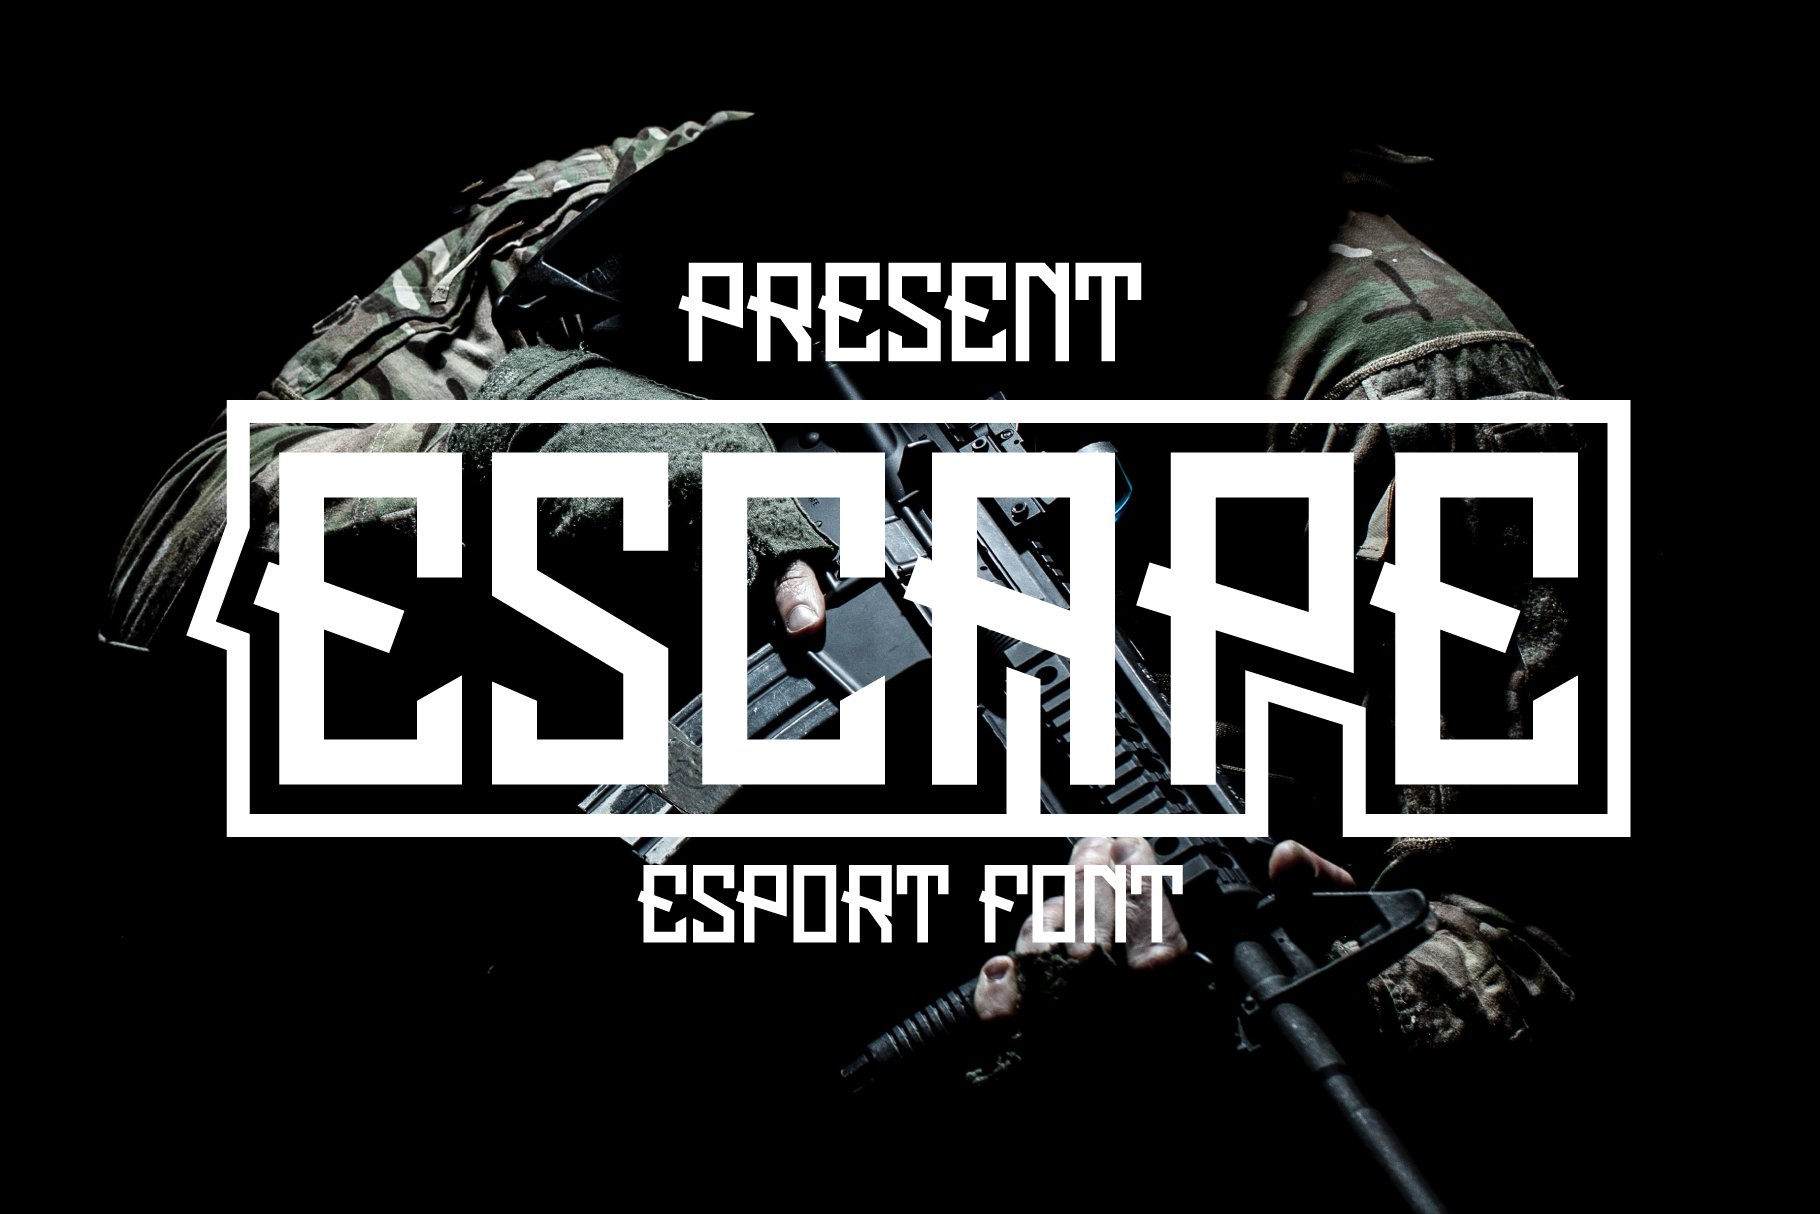 Escape - Blackletter Fonts cover image.